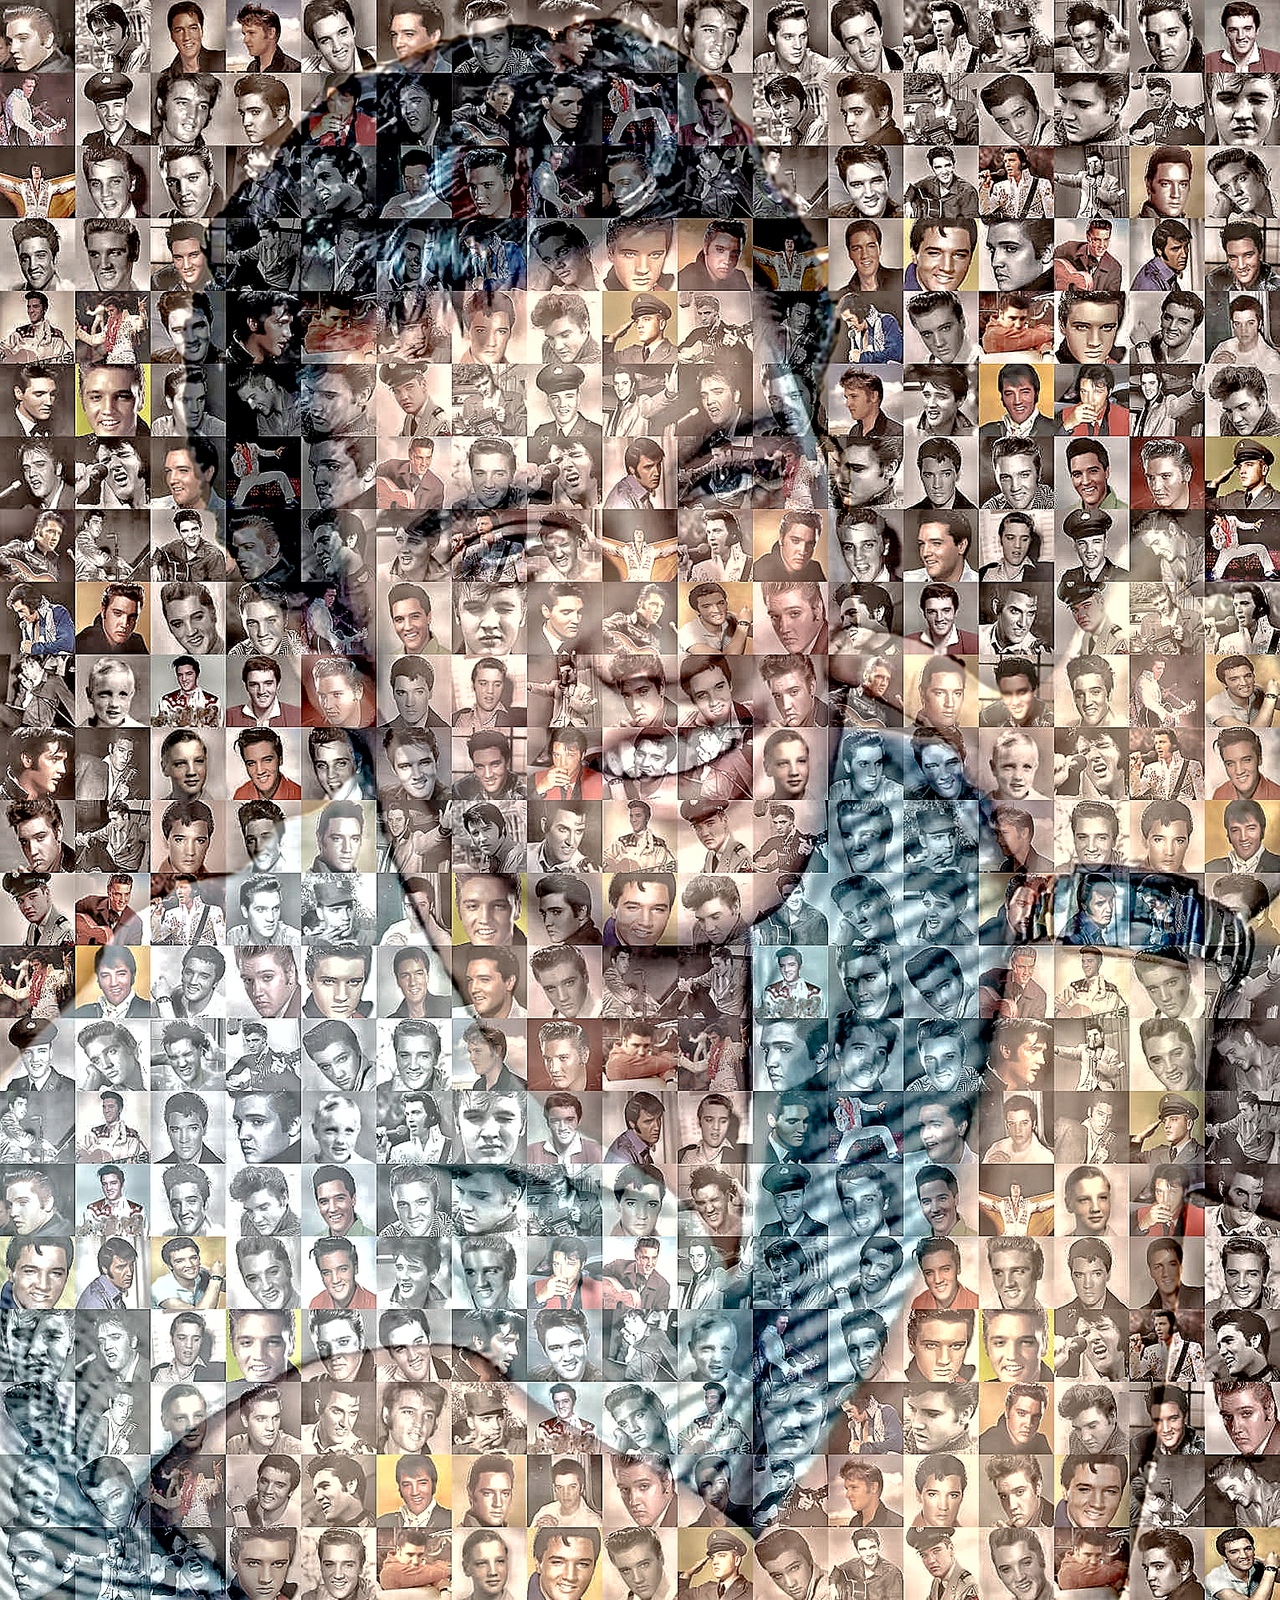 Elvis Presley Photo Mosaic Print Art - $35.00 - $145.00